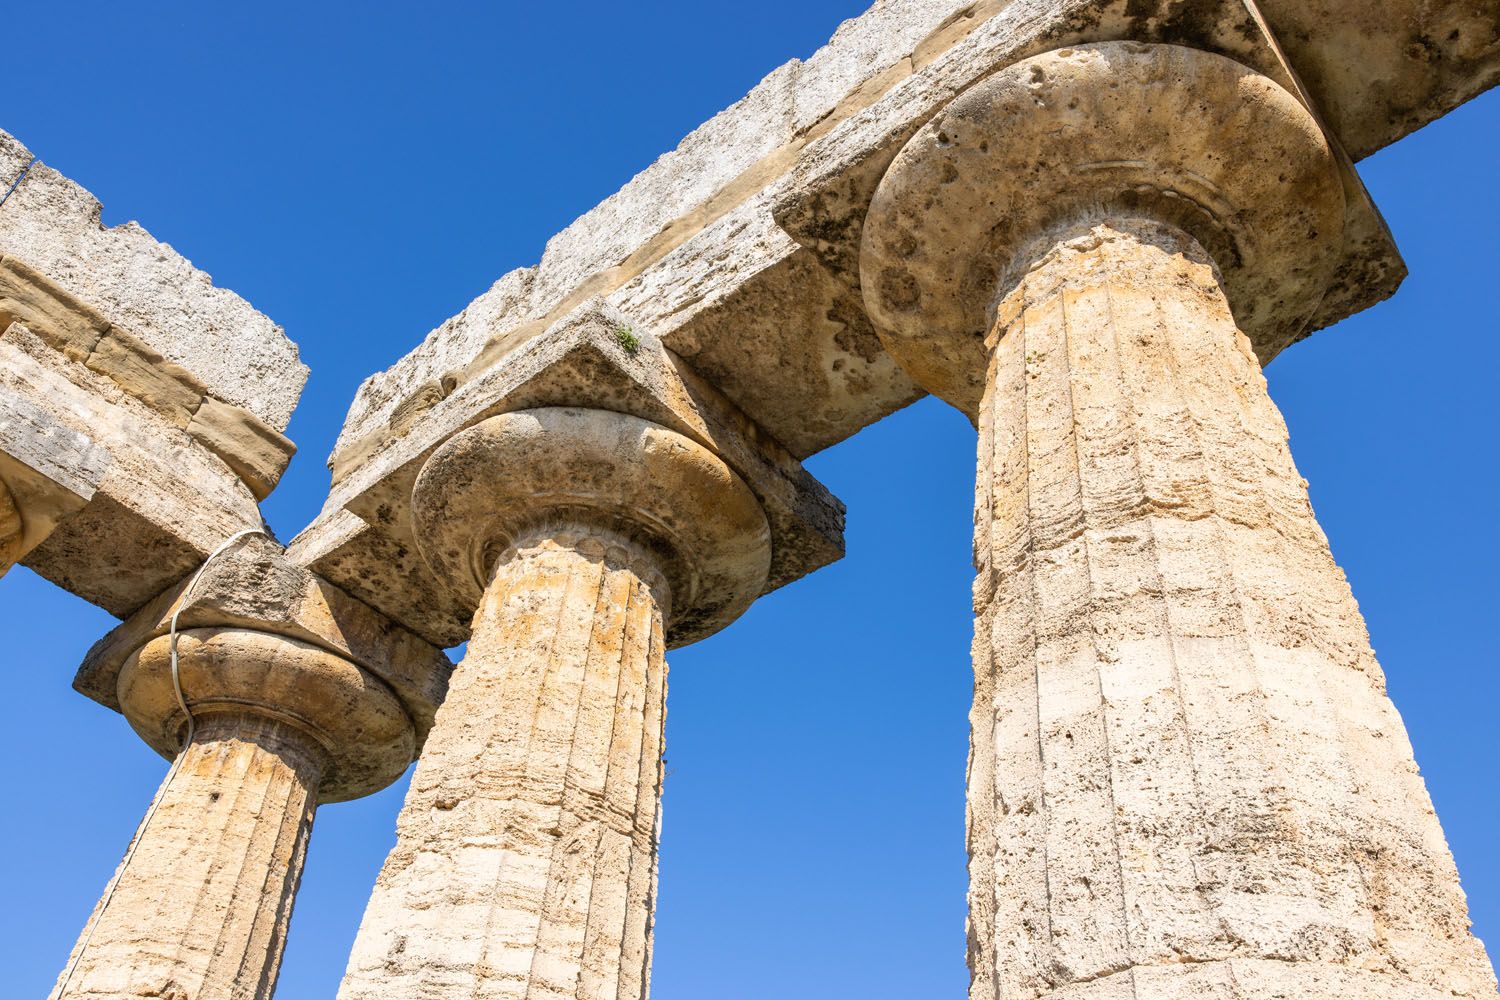 Temple of Hera Columns